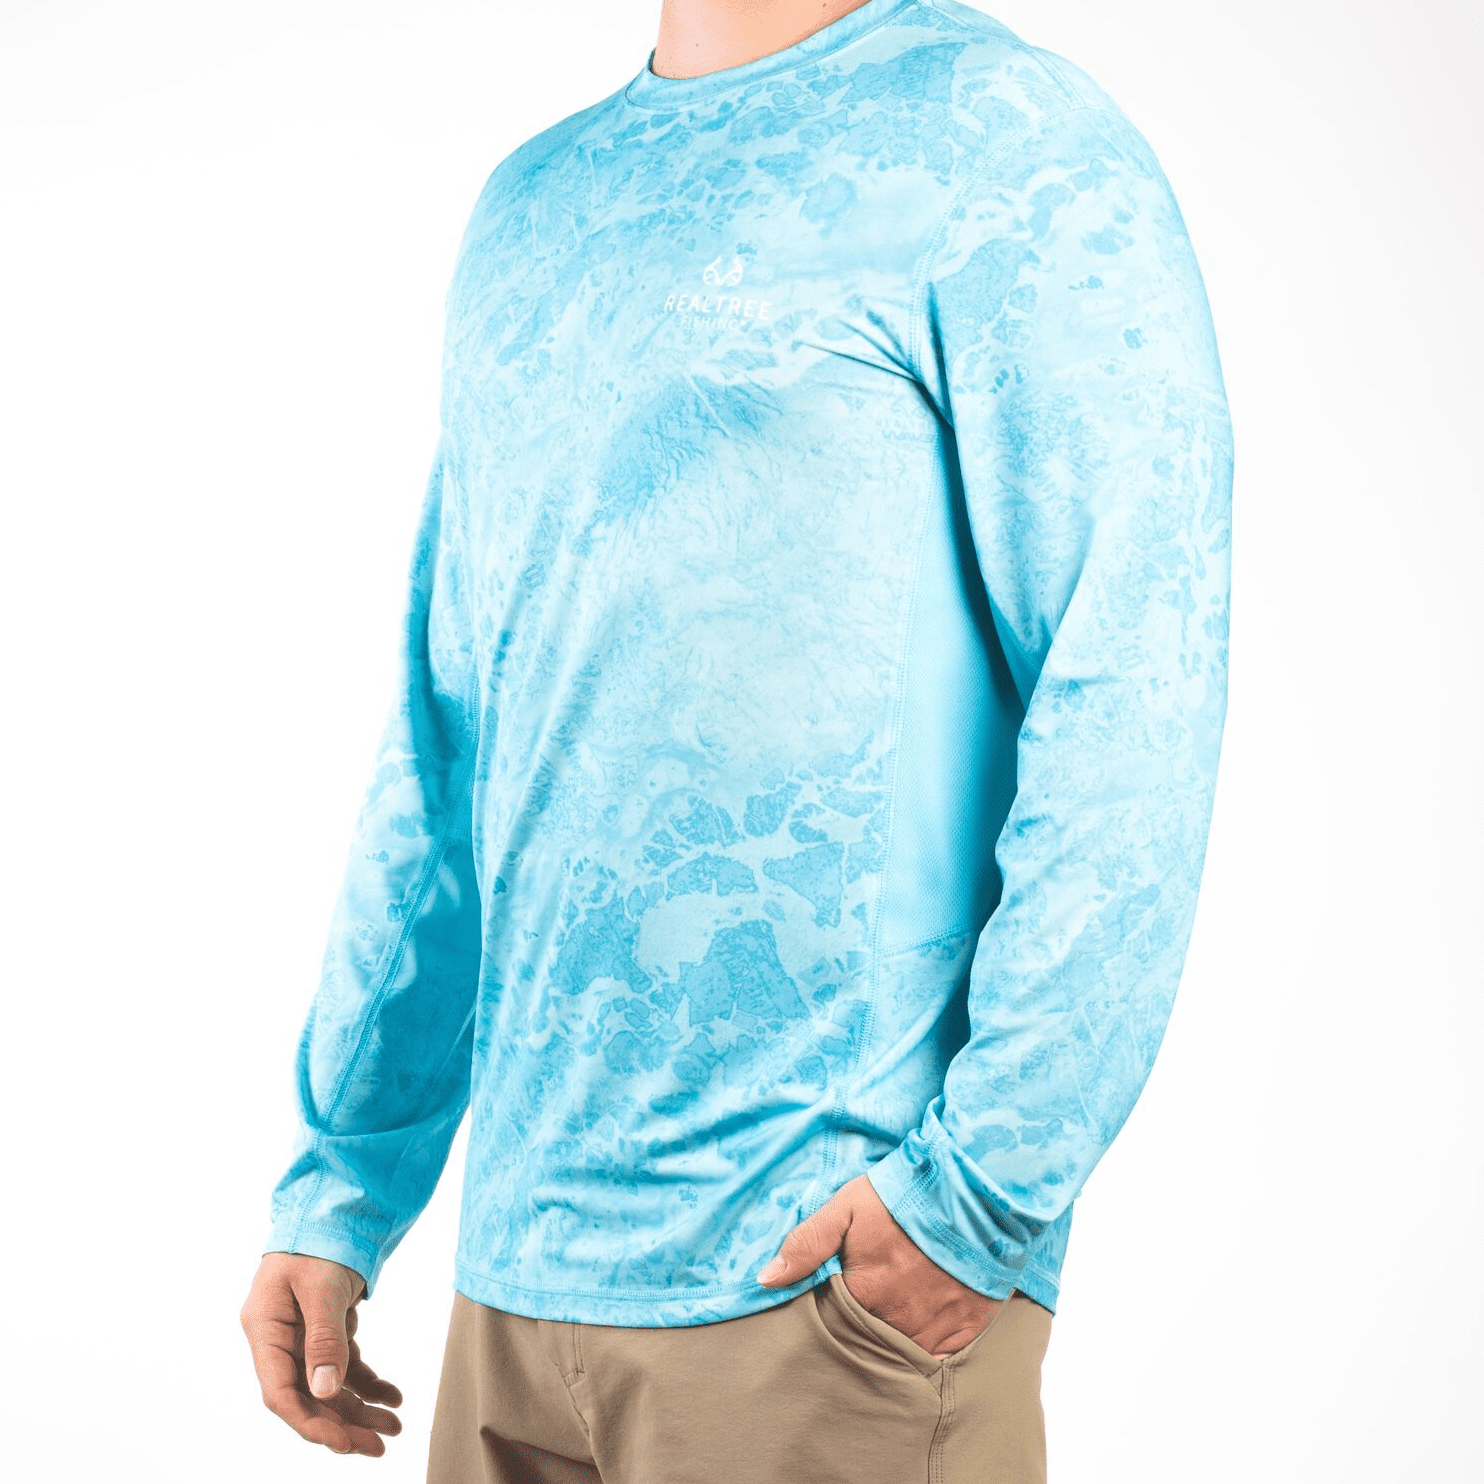 Realtree Wav3 Neon Citrus Camo Long Sleeve Performance Fishing Shirt for Men